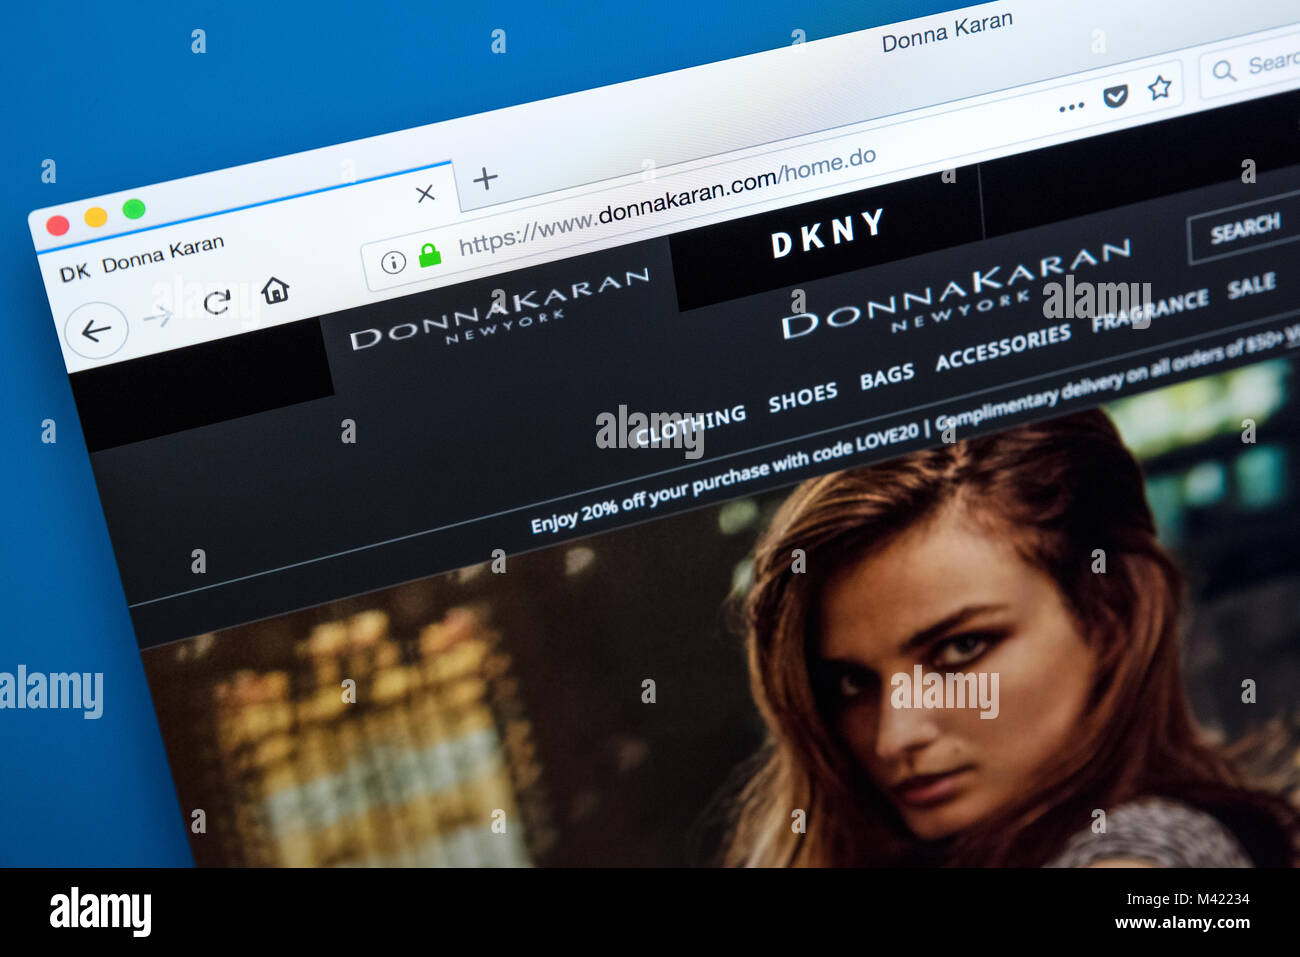 Dkny store fotografías e imágenes de alta resolución - Alamy